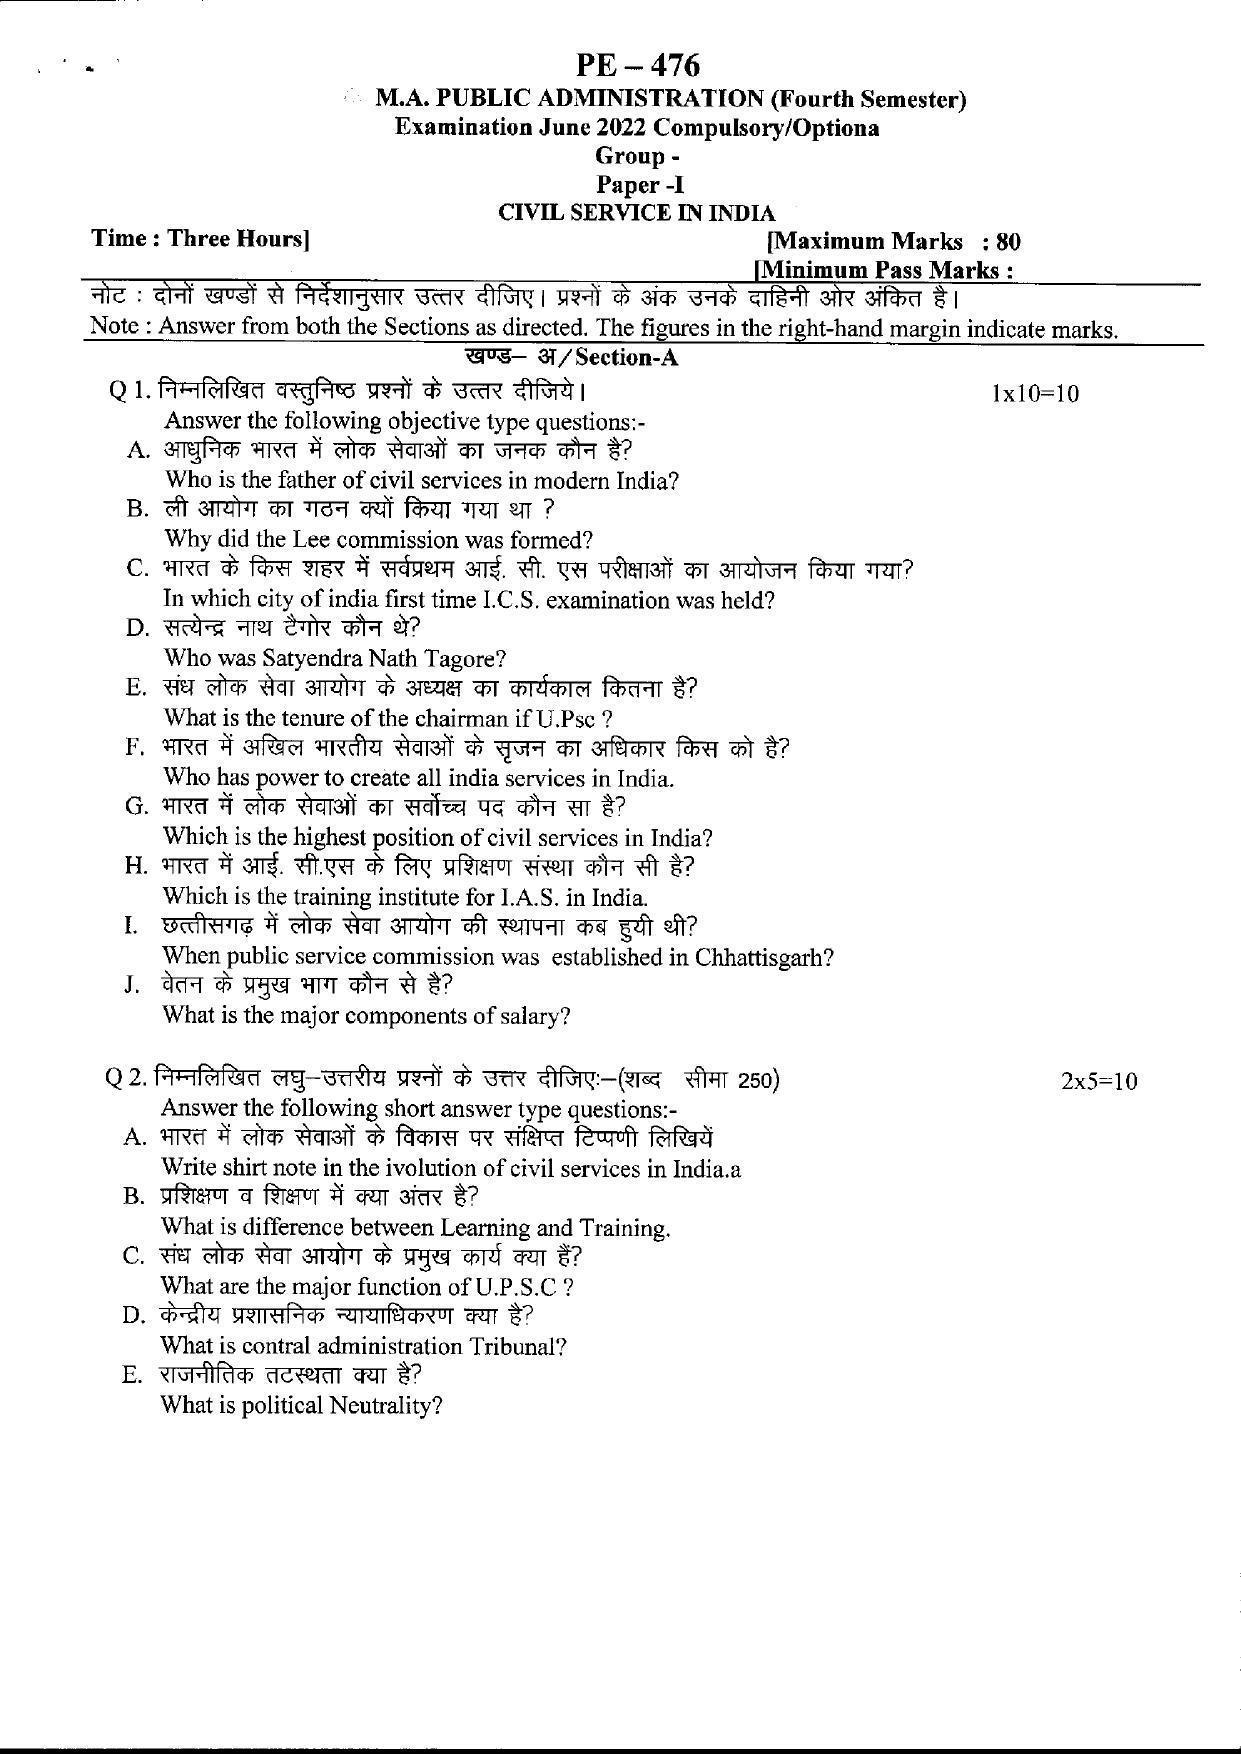 Bilaspur University Question Paper June 2022:M.A. Public Administration (Fourth Semester) Civil Service In India Paper 1 - Page 1